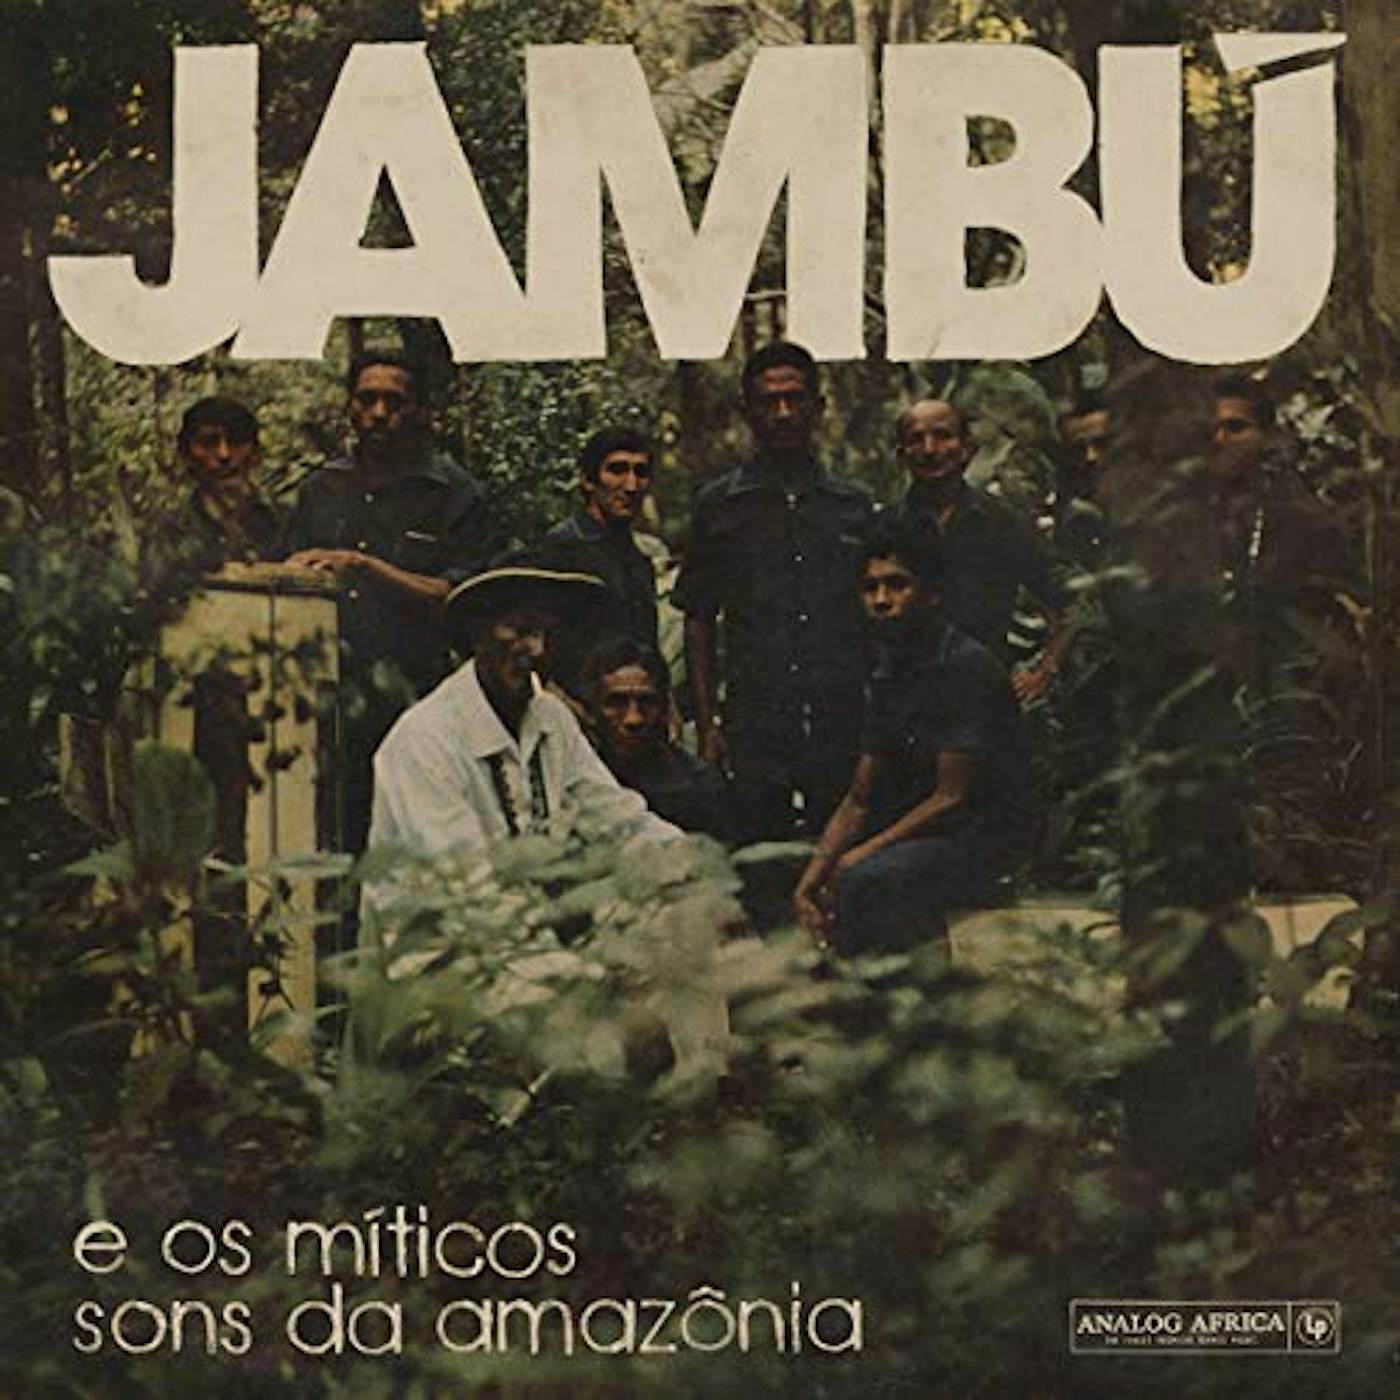 JAMBU E OS MITICOS SONS DA AMAZONIA / VARIOUS CD